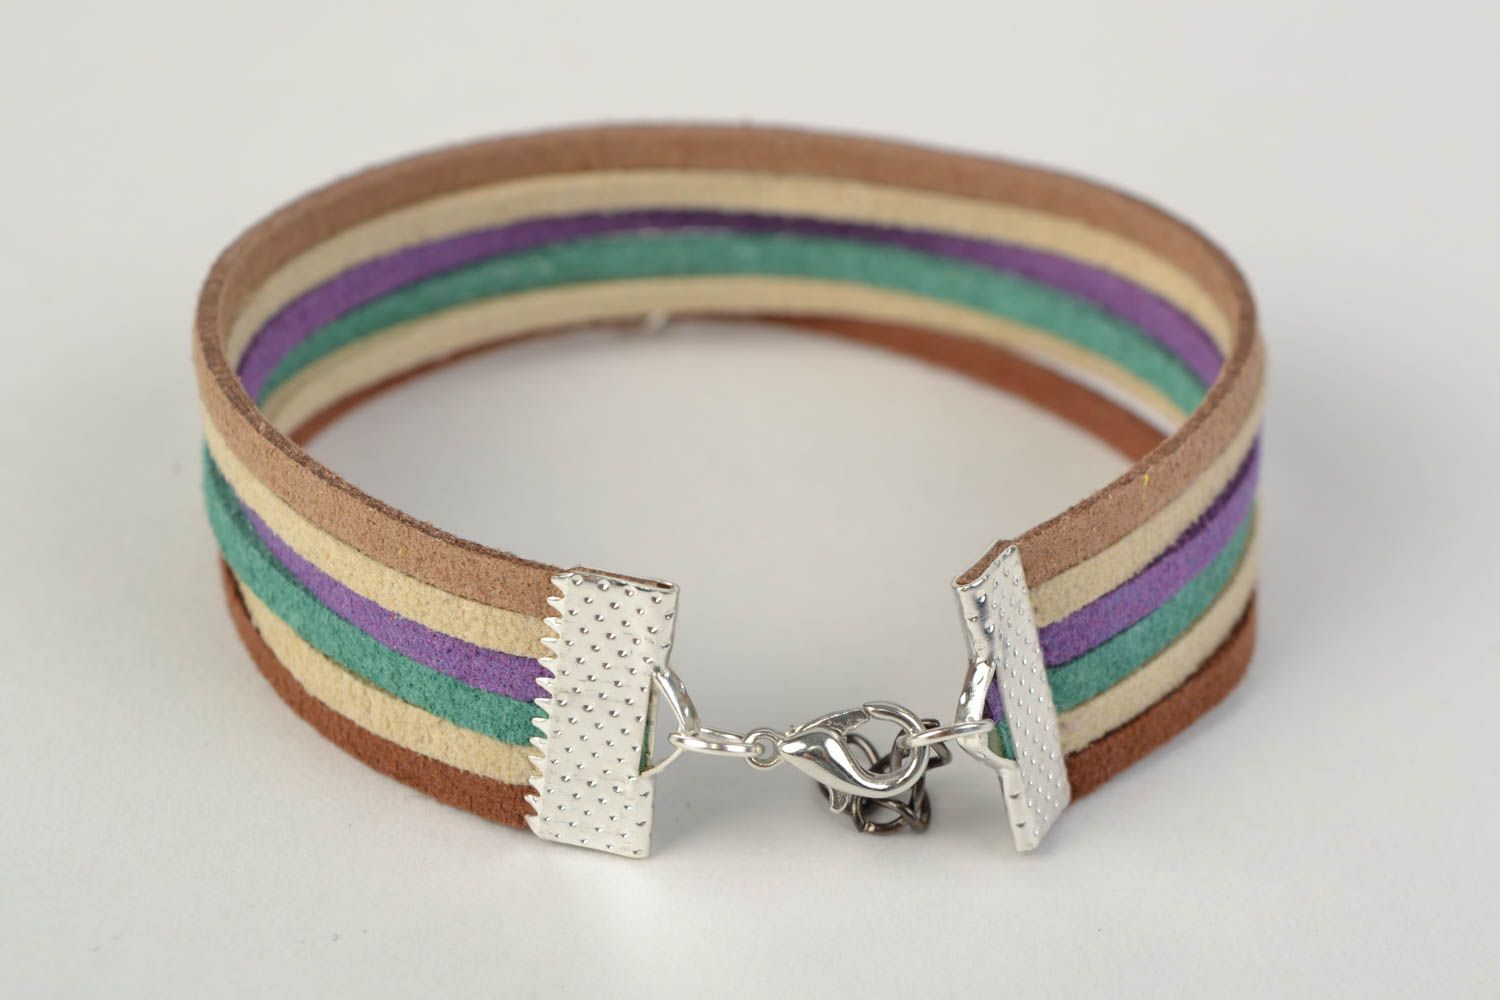 Handmade colorful multi row suede cord wrist bracelet with metal charm Owl photo 4